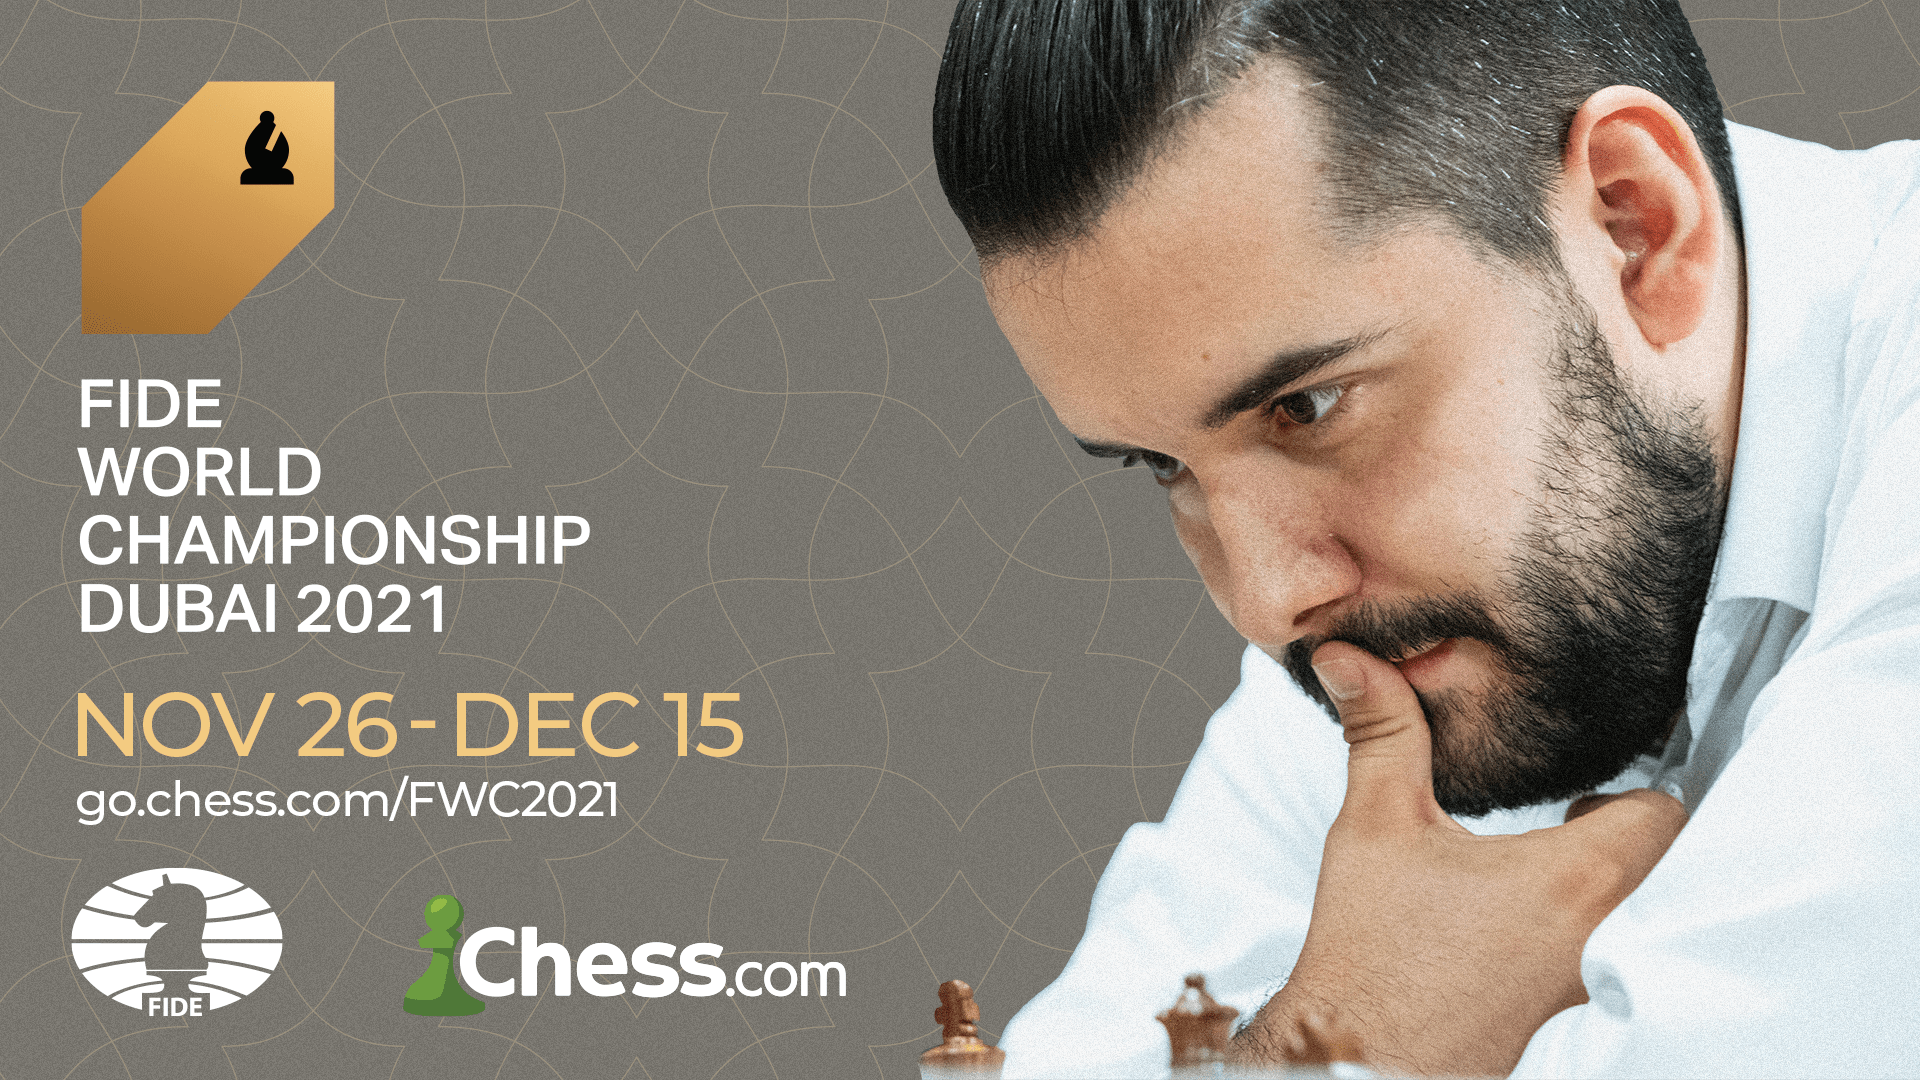 World chess championship 2021